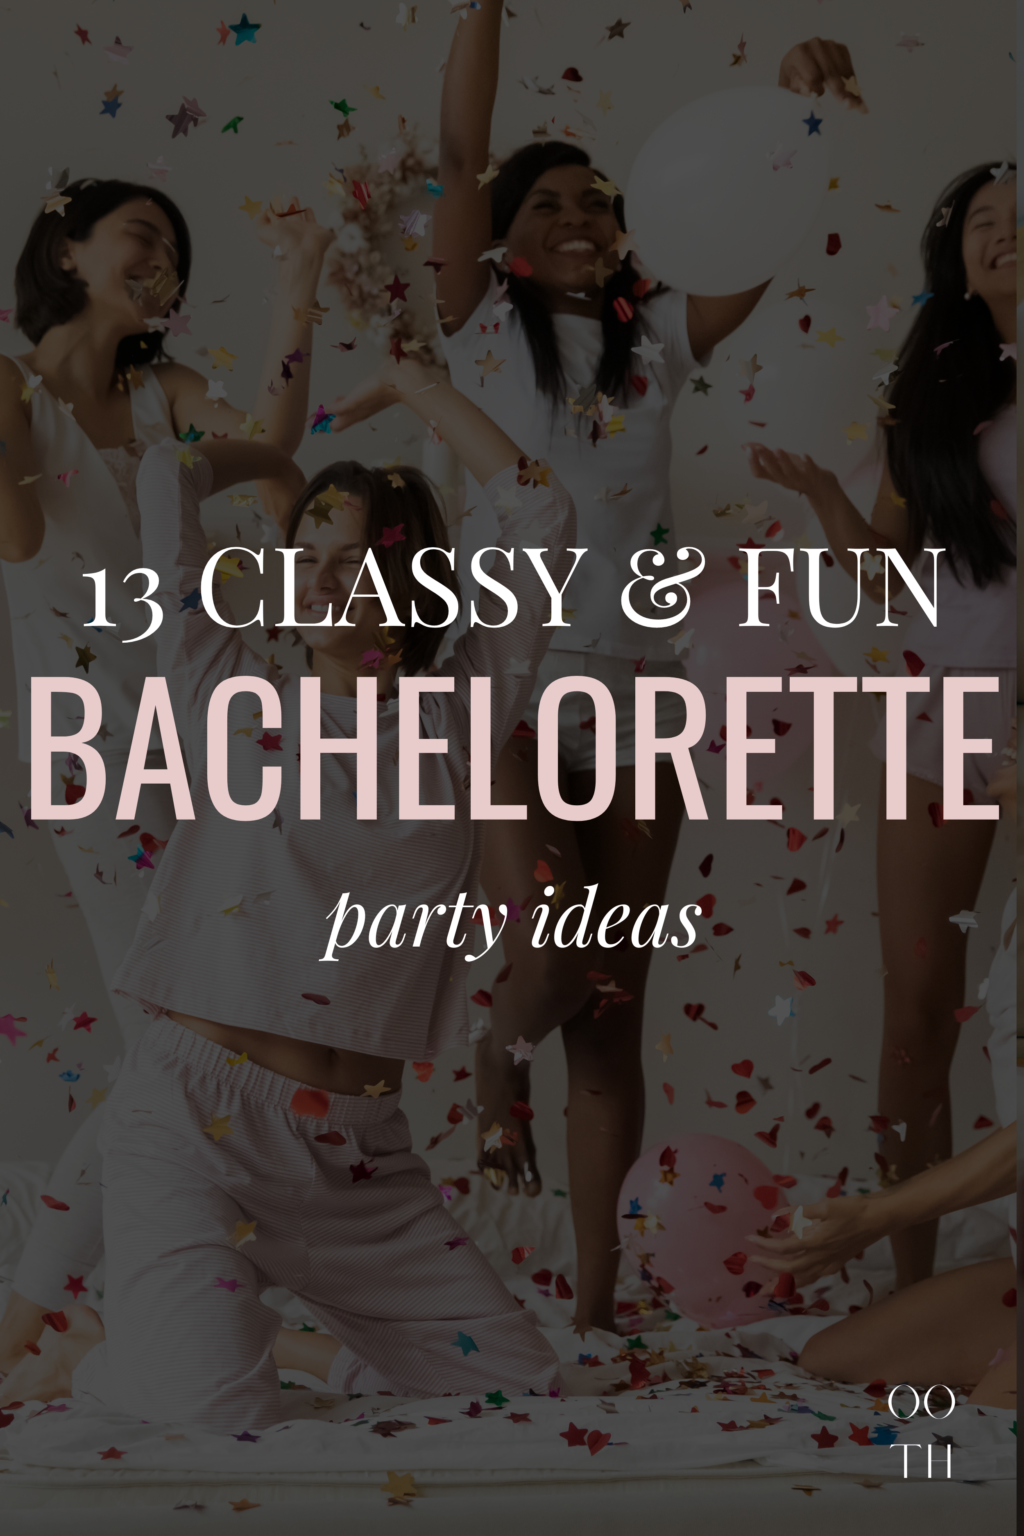 Classy Bachelorette Party Ideas | 13 Ideas for a Clean & FUN ...